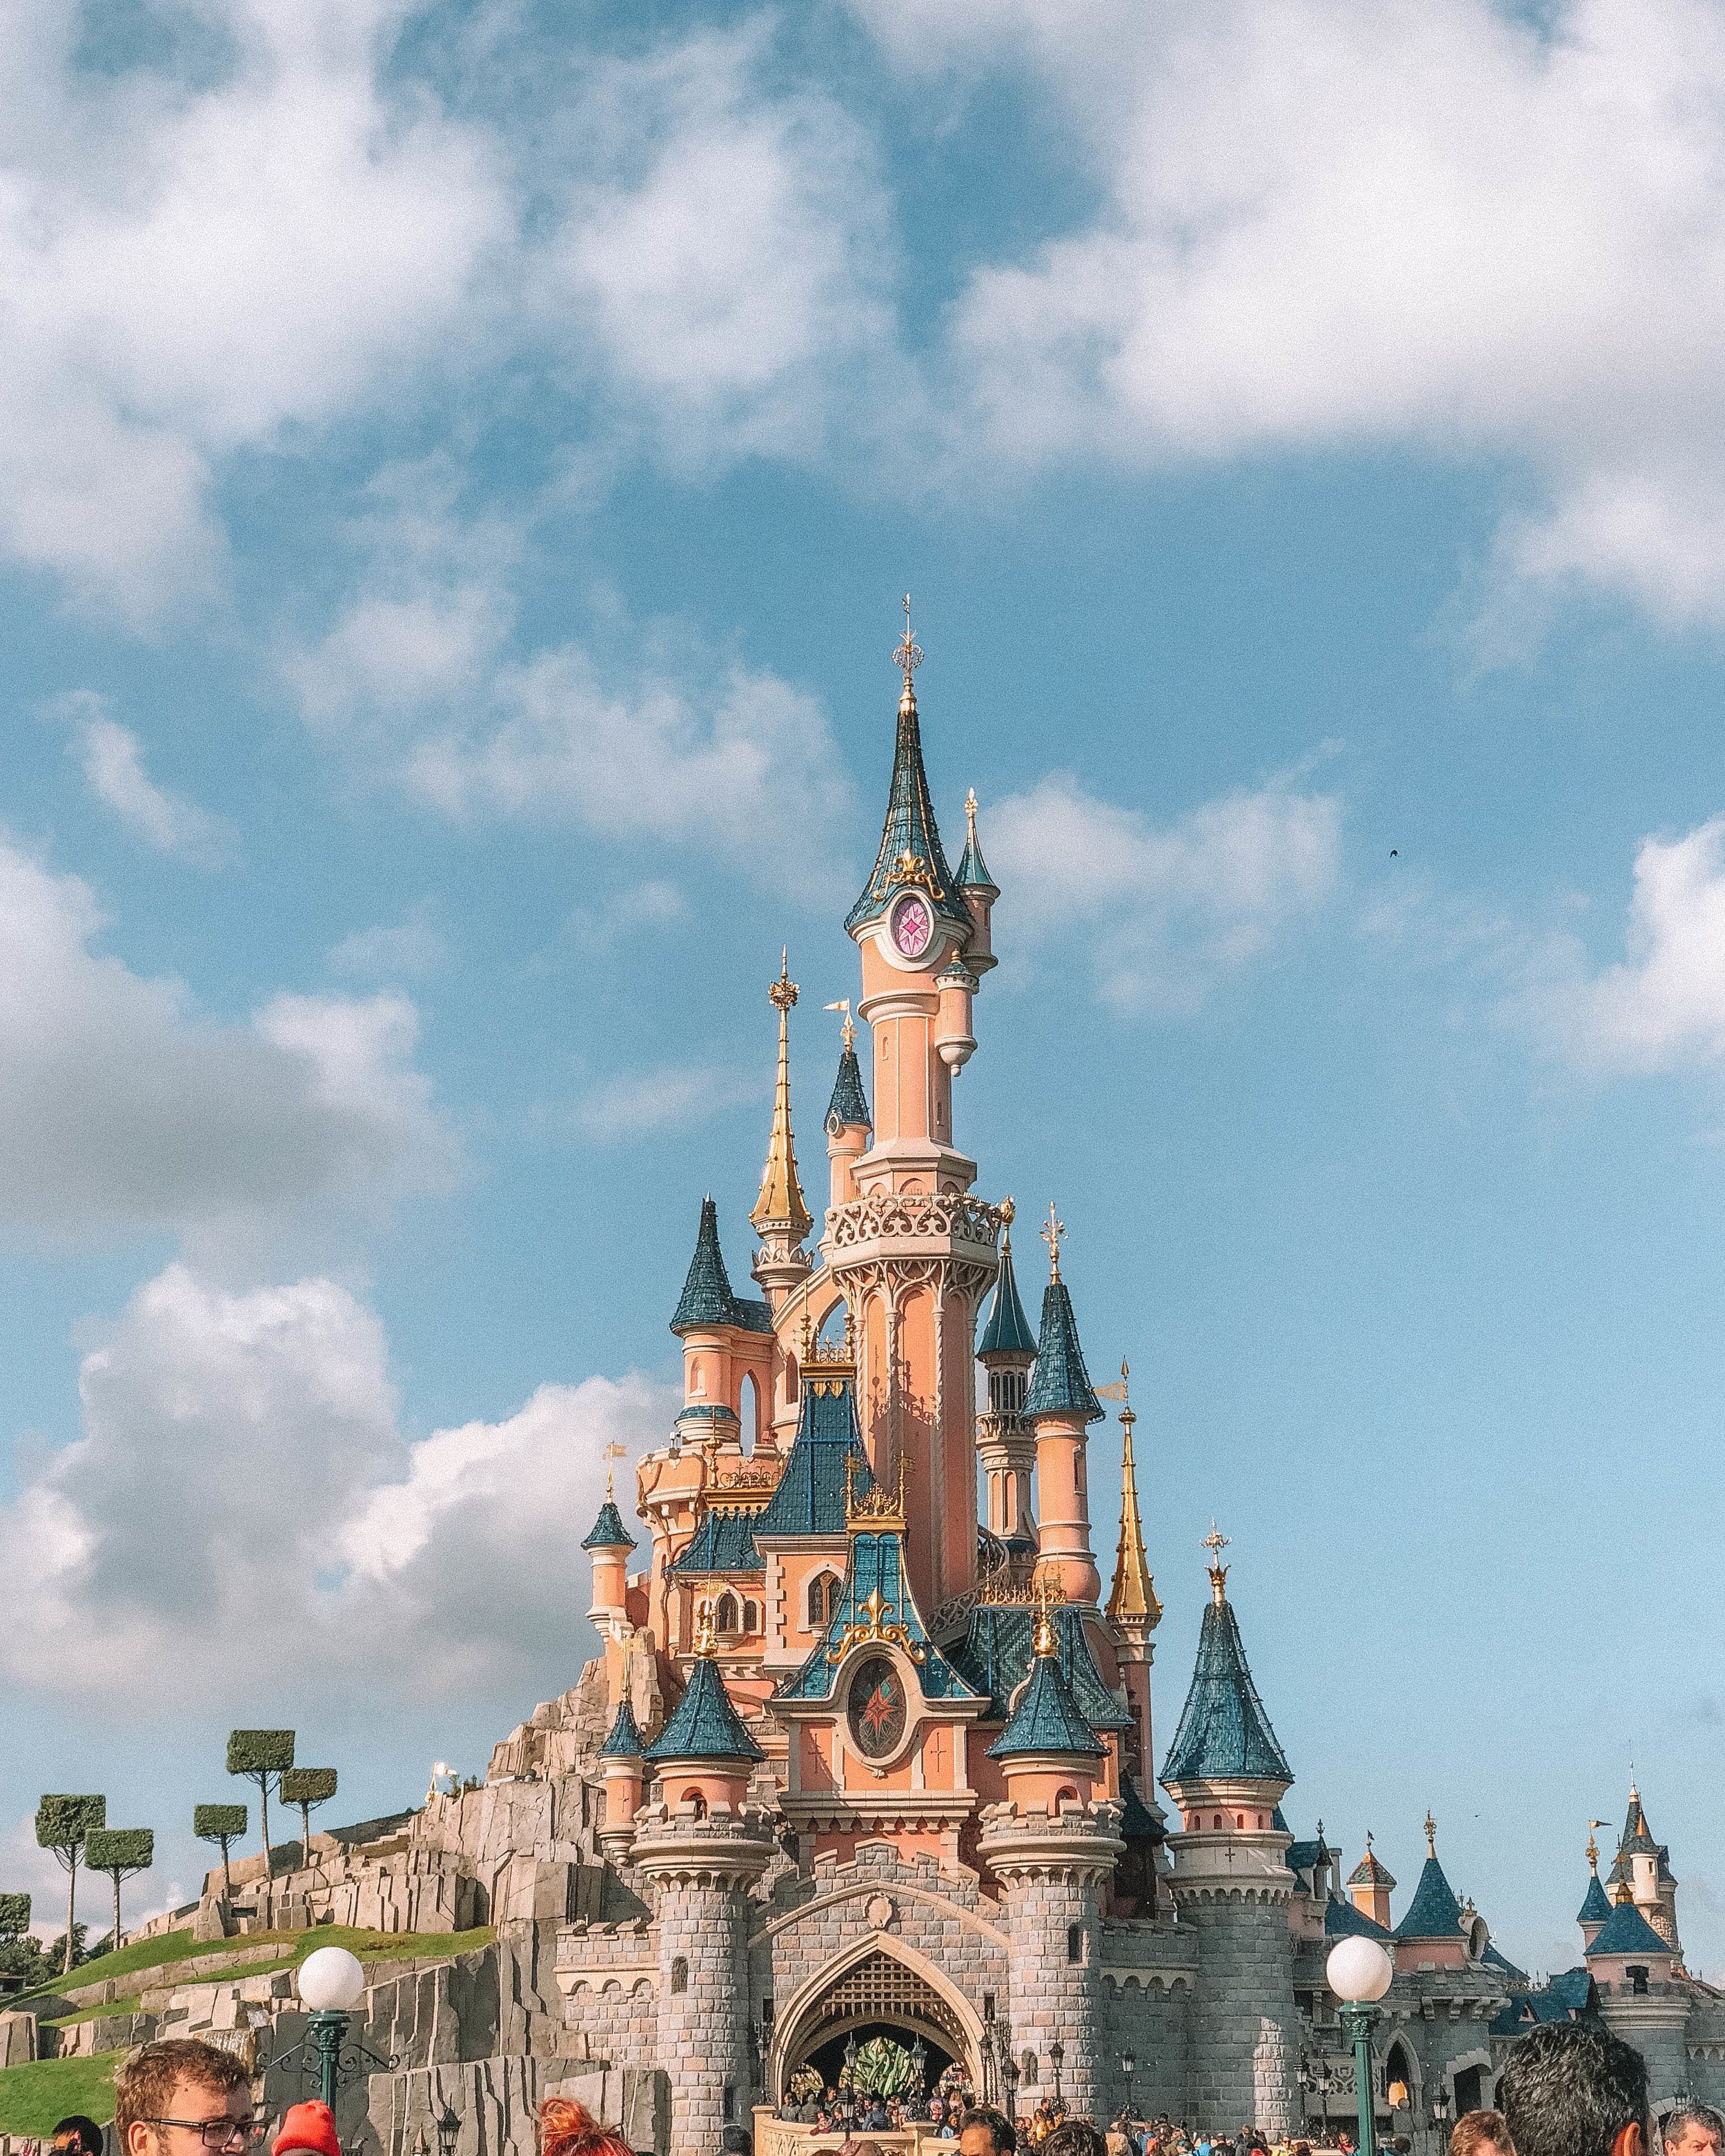 Sleeping Beauty Castle Paris. Disneyland paris, Disneyland paris castle, Disneyland